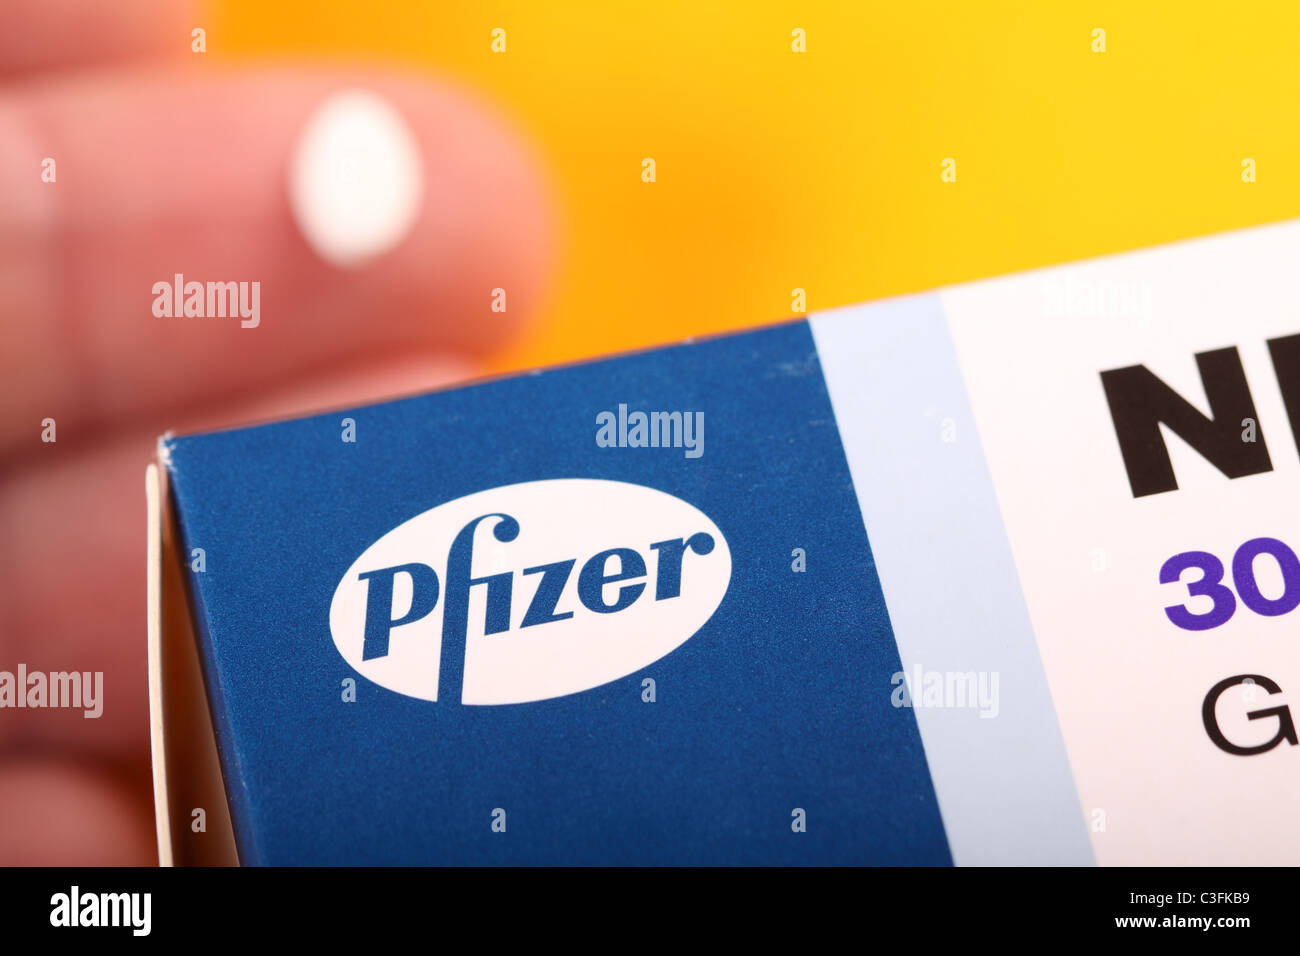 Pfizer drug company medicine tablets Stock Photo